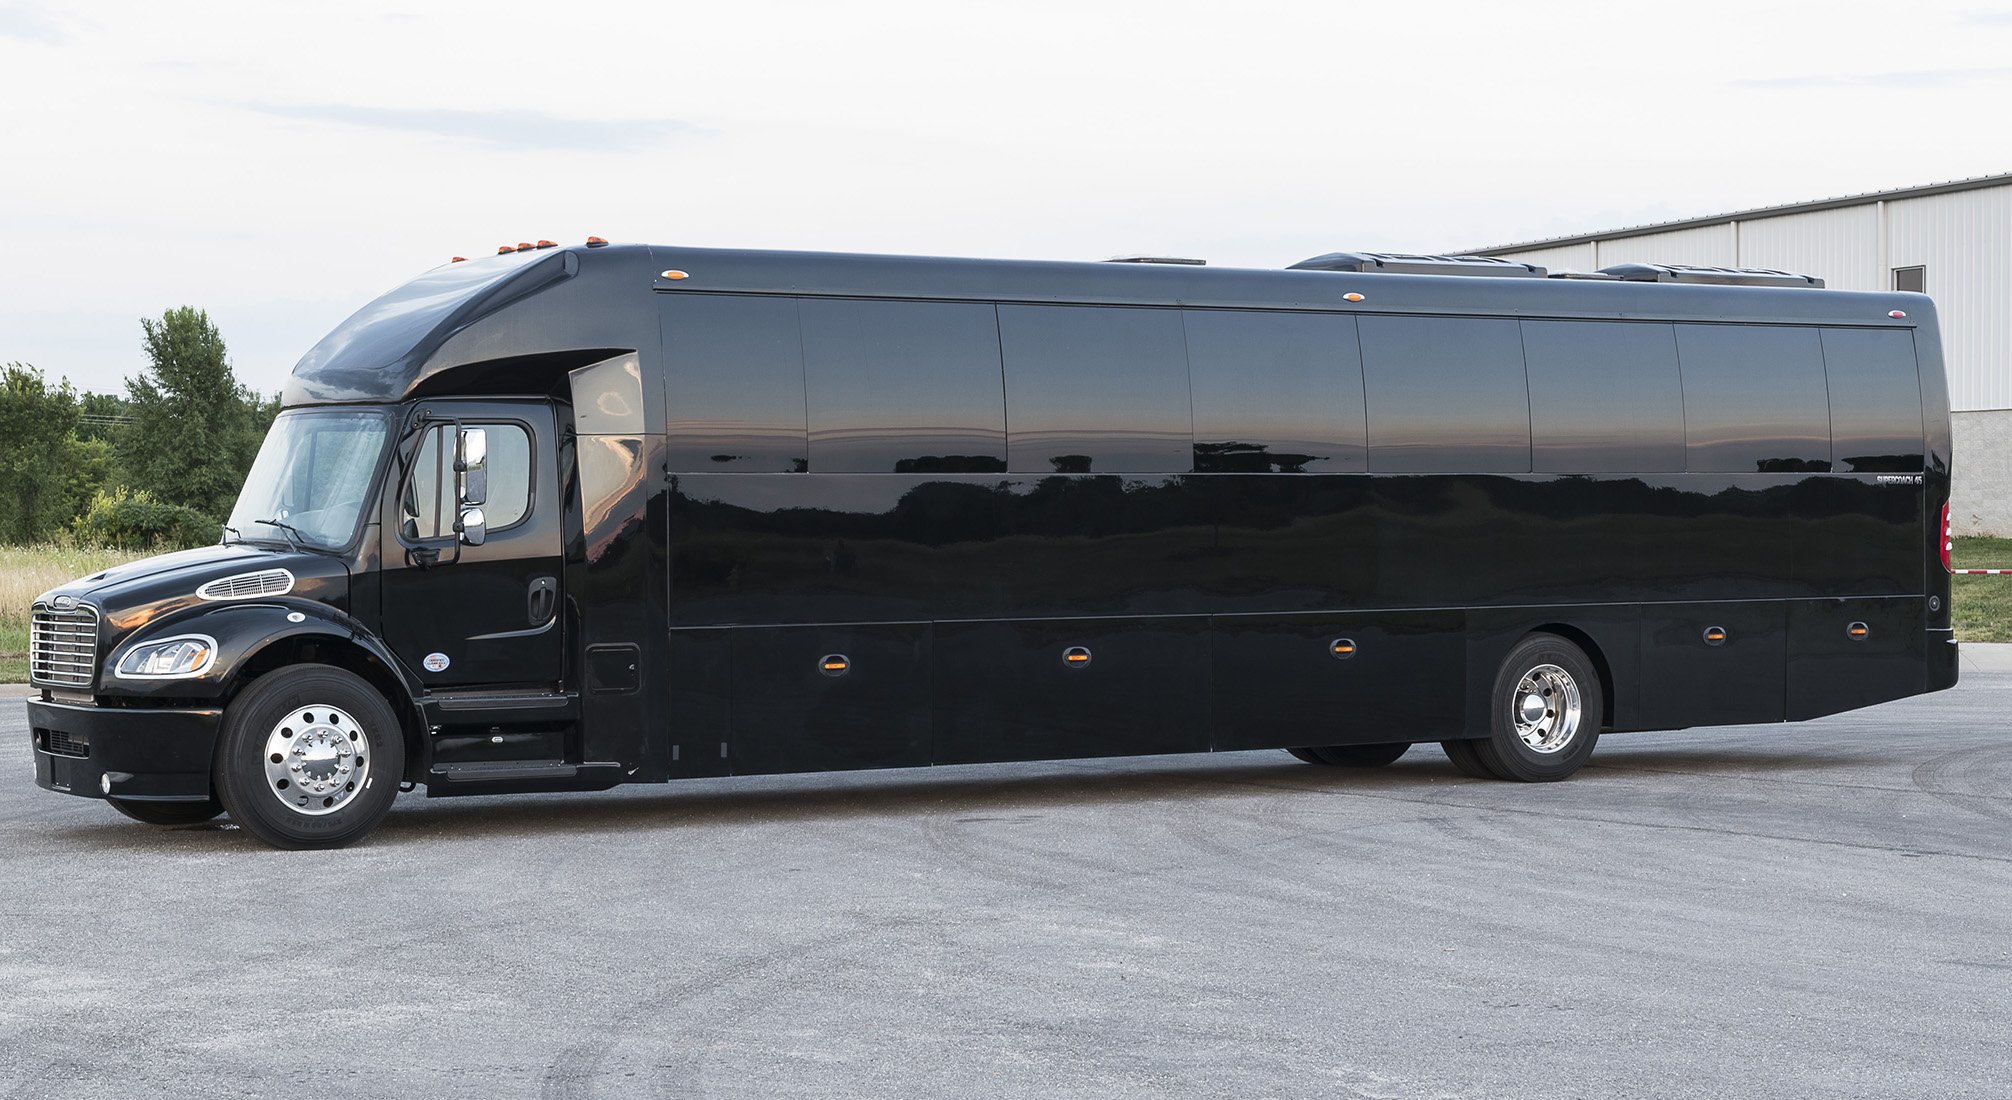 luxury tour bus for sale usa